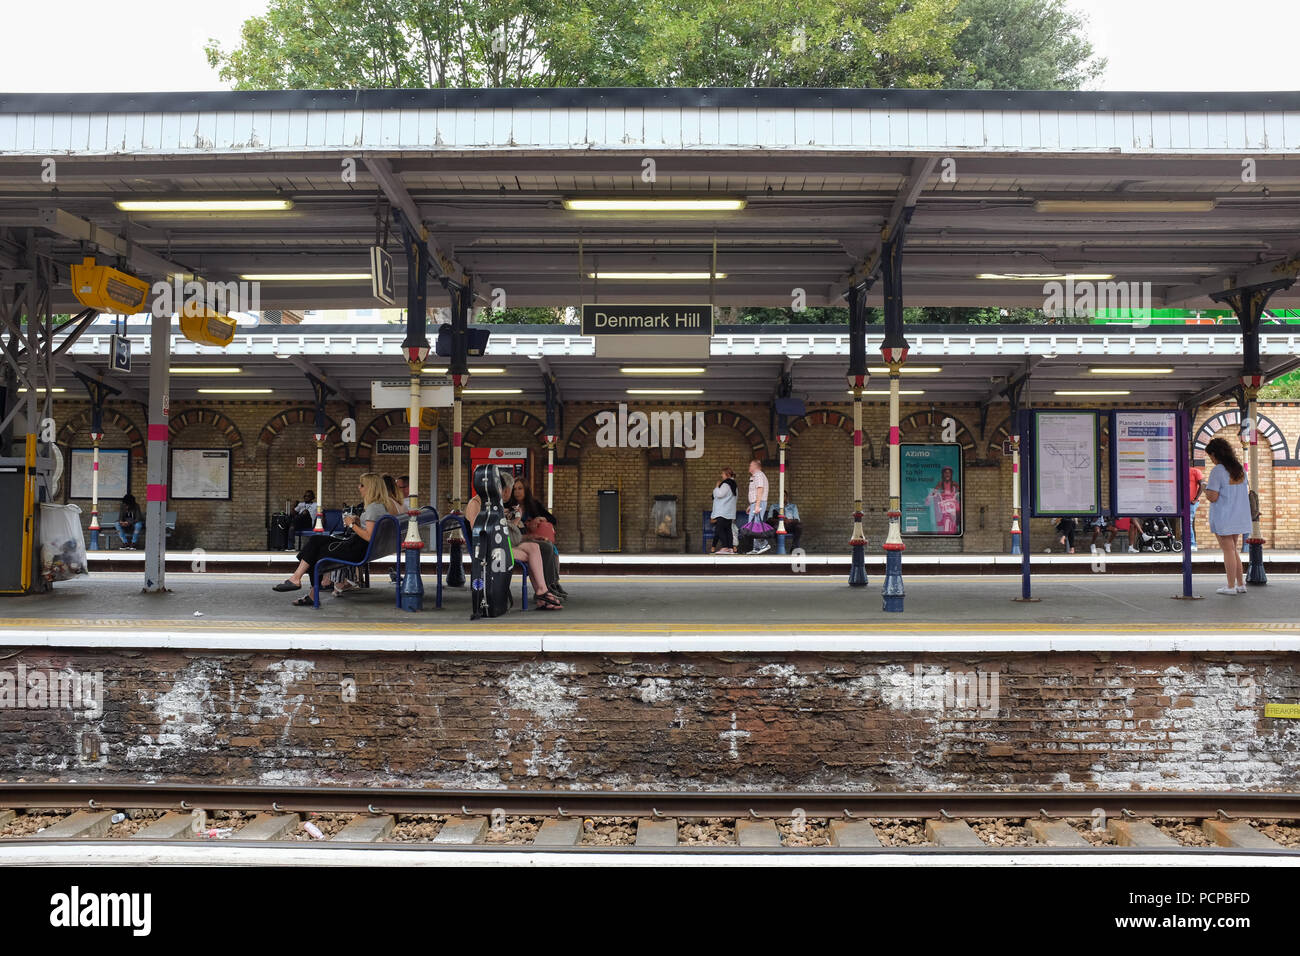 Denmark Hill railway station in London, England. Stock Photo